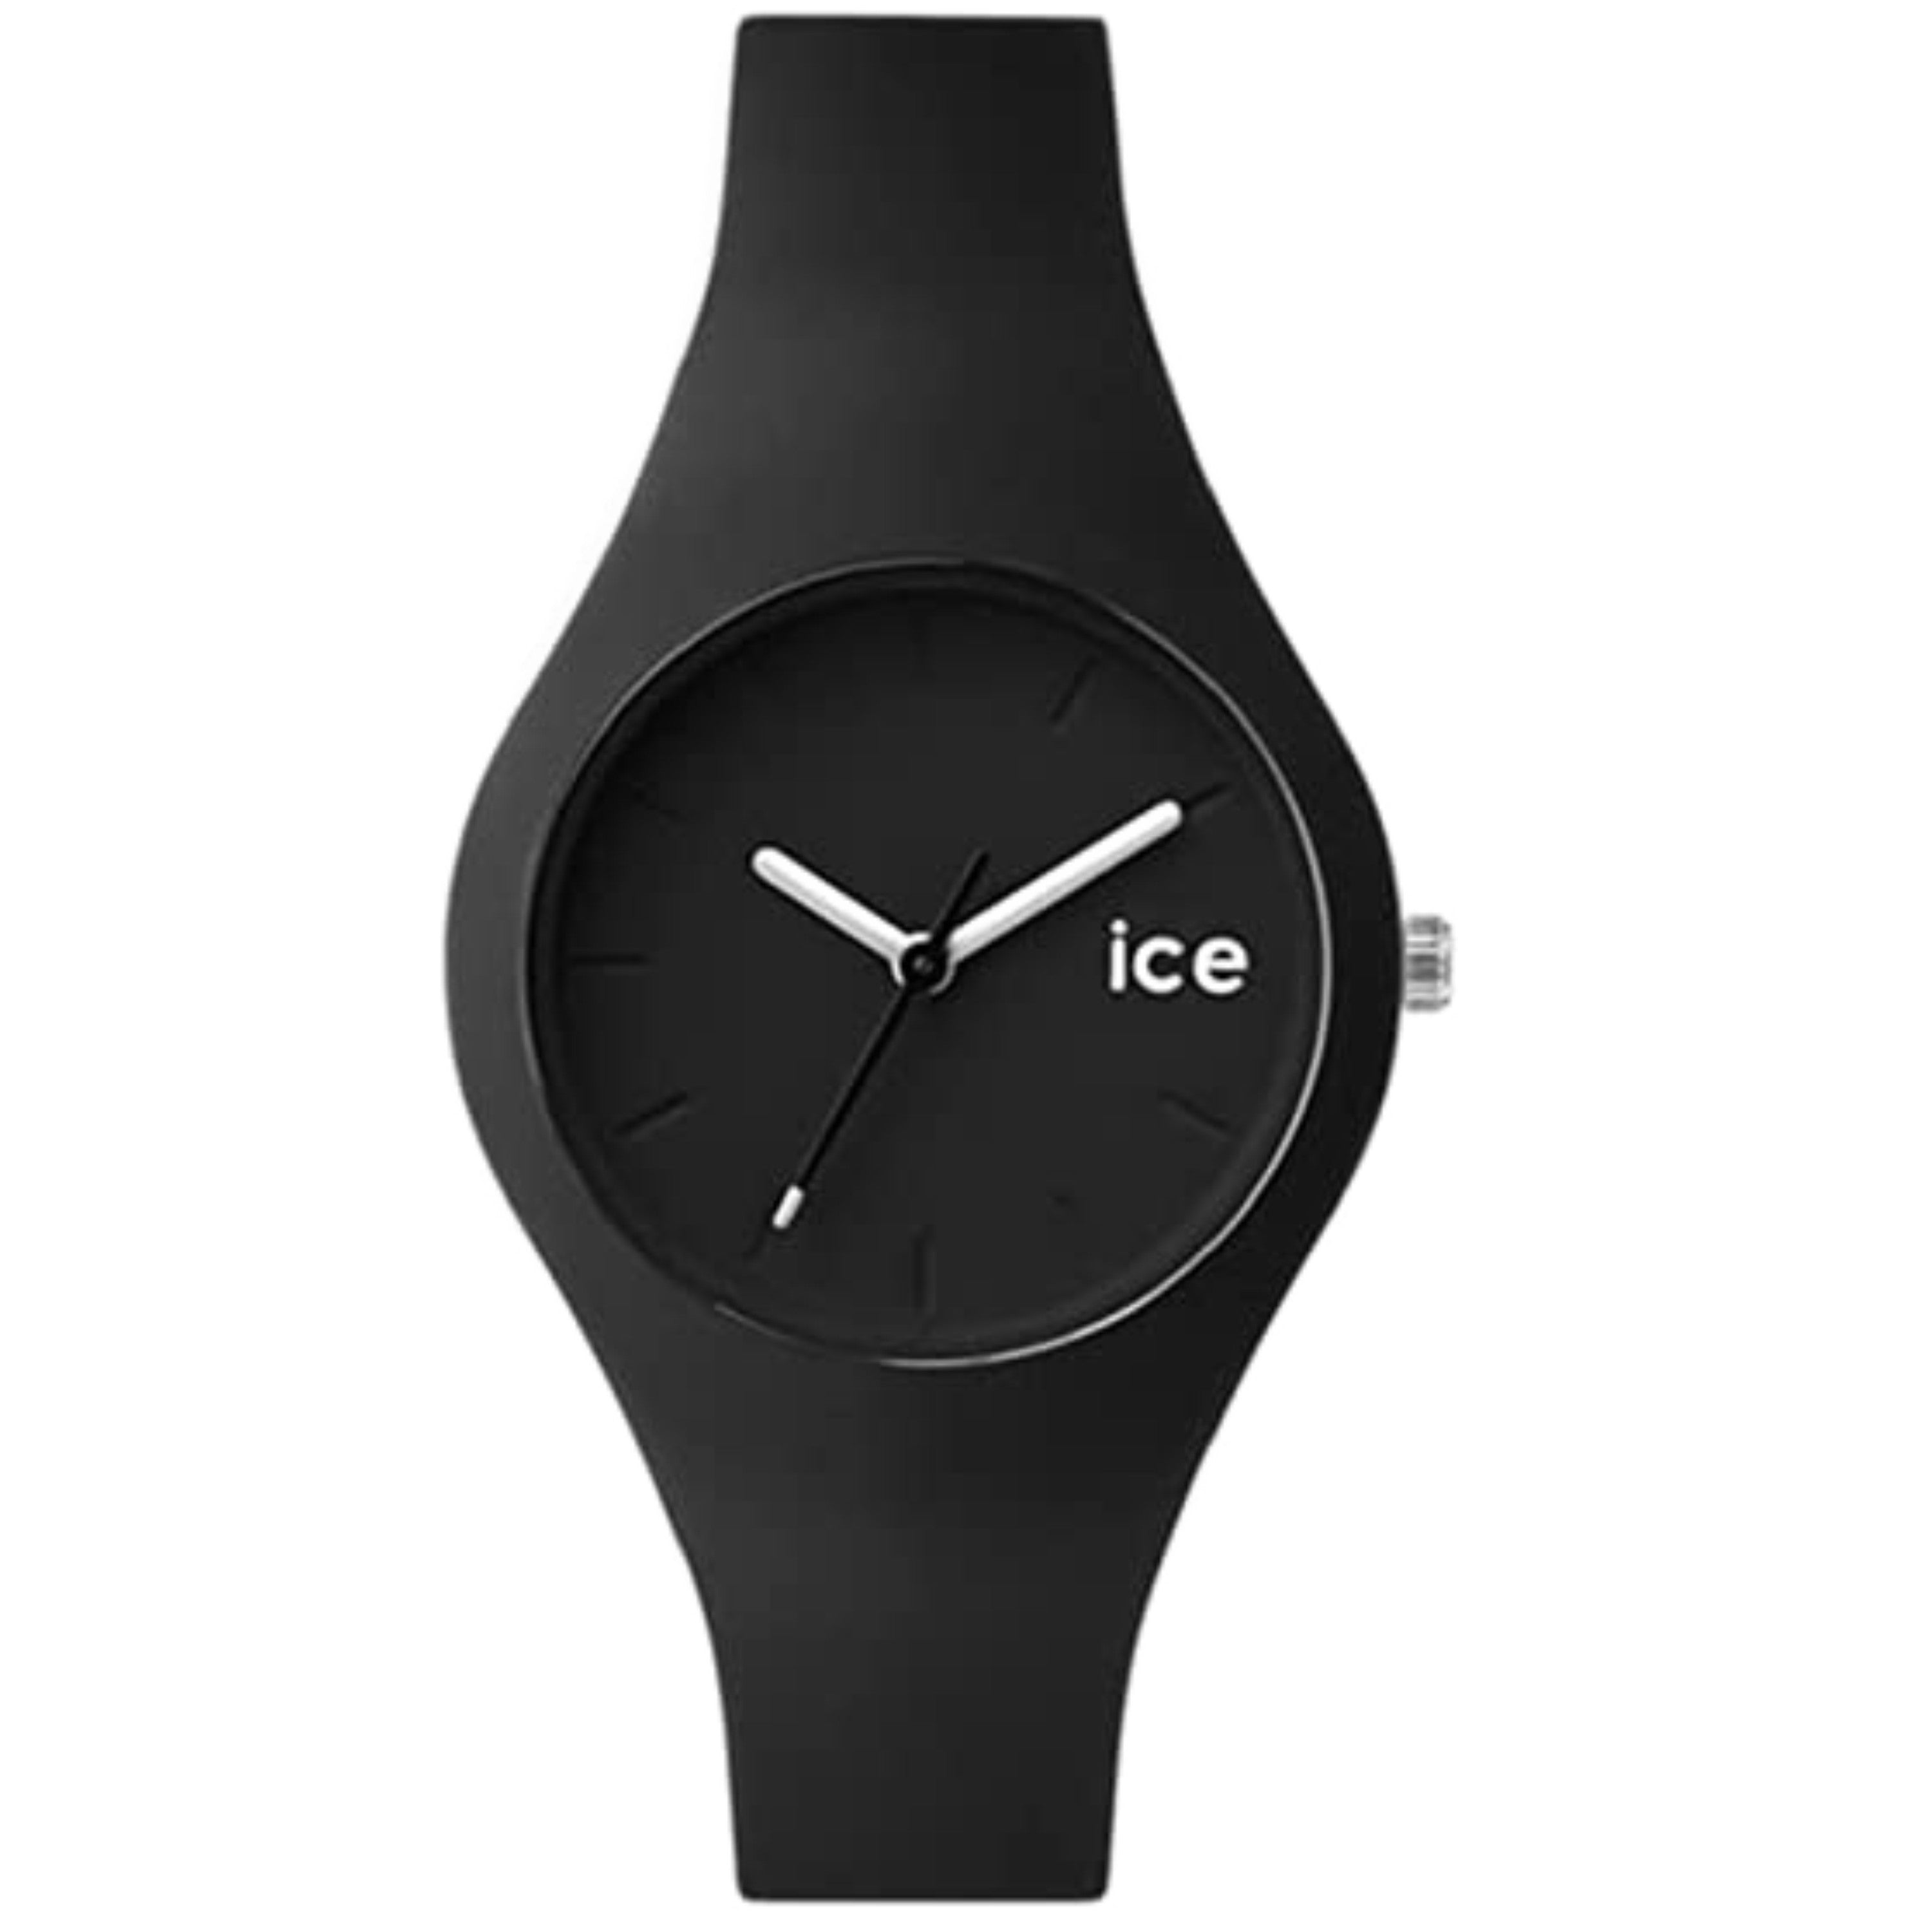 ICE Silicon Unisex Black Watch